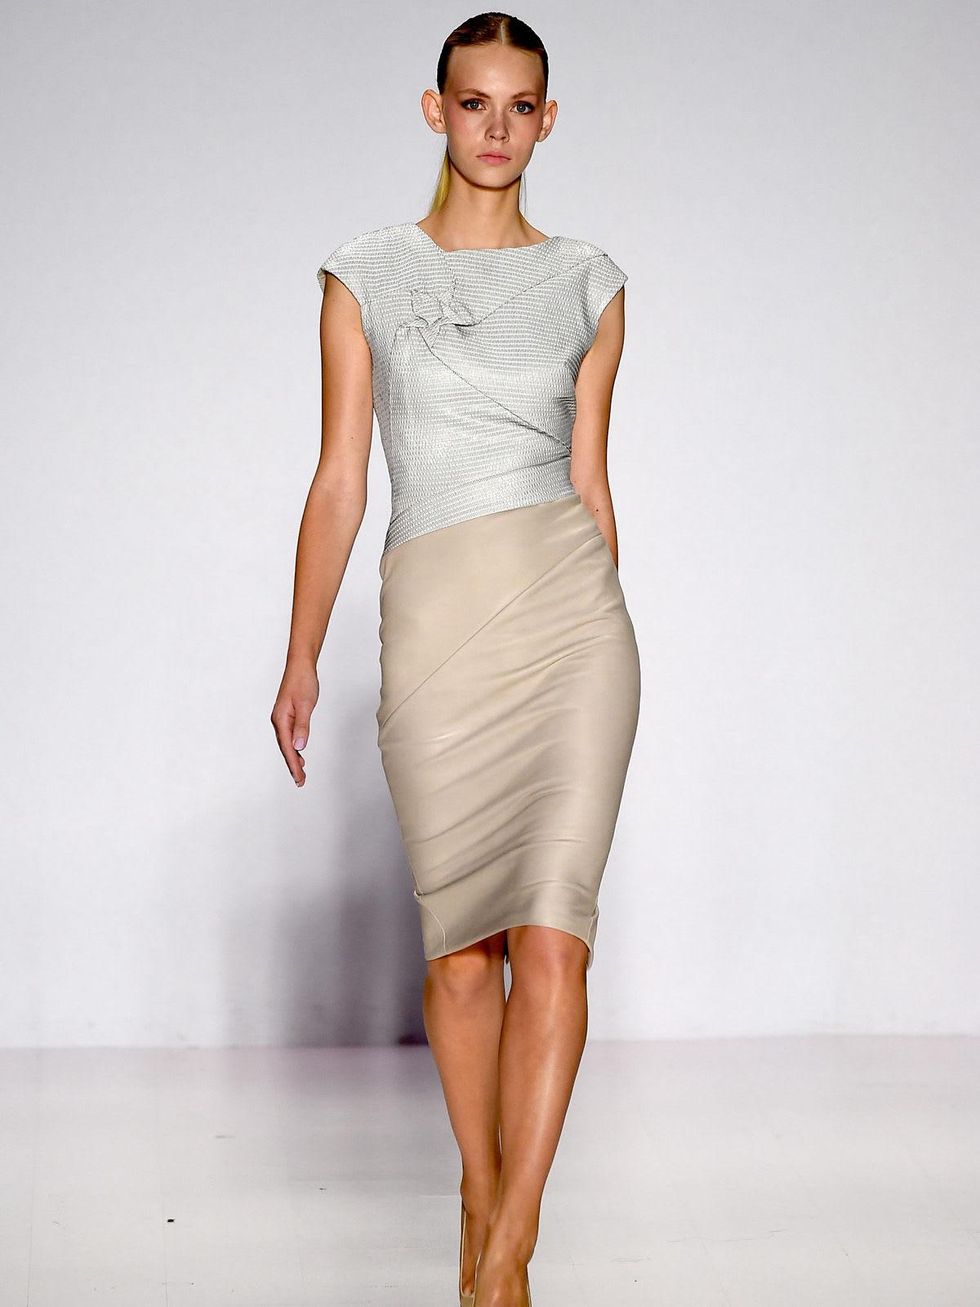 Fashion Week spring 2015 Pamella Roland body-con dress